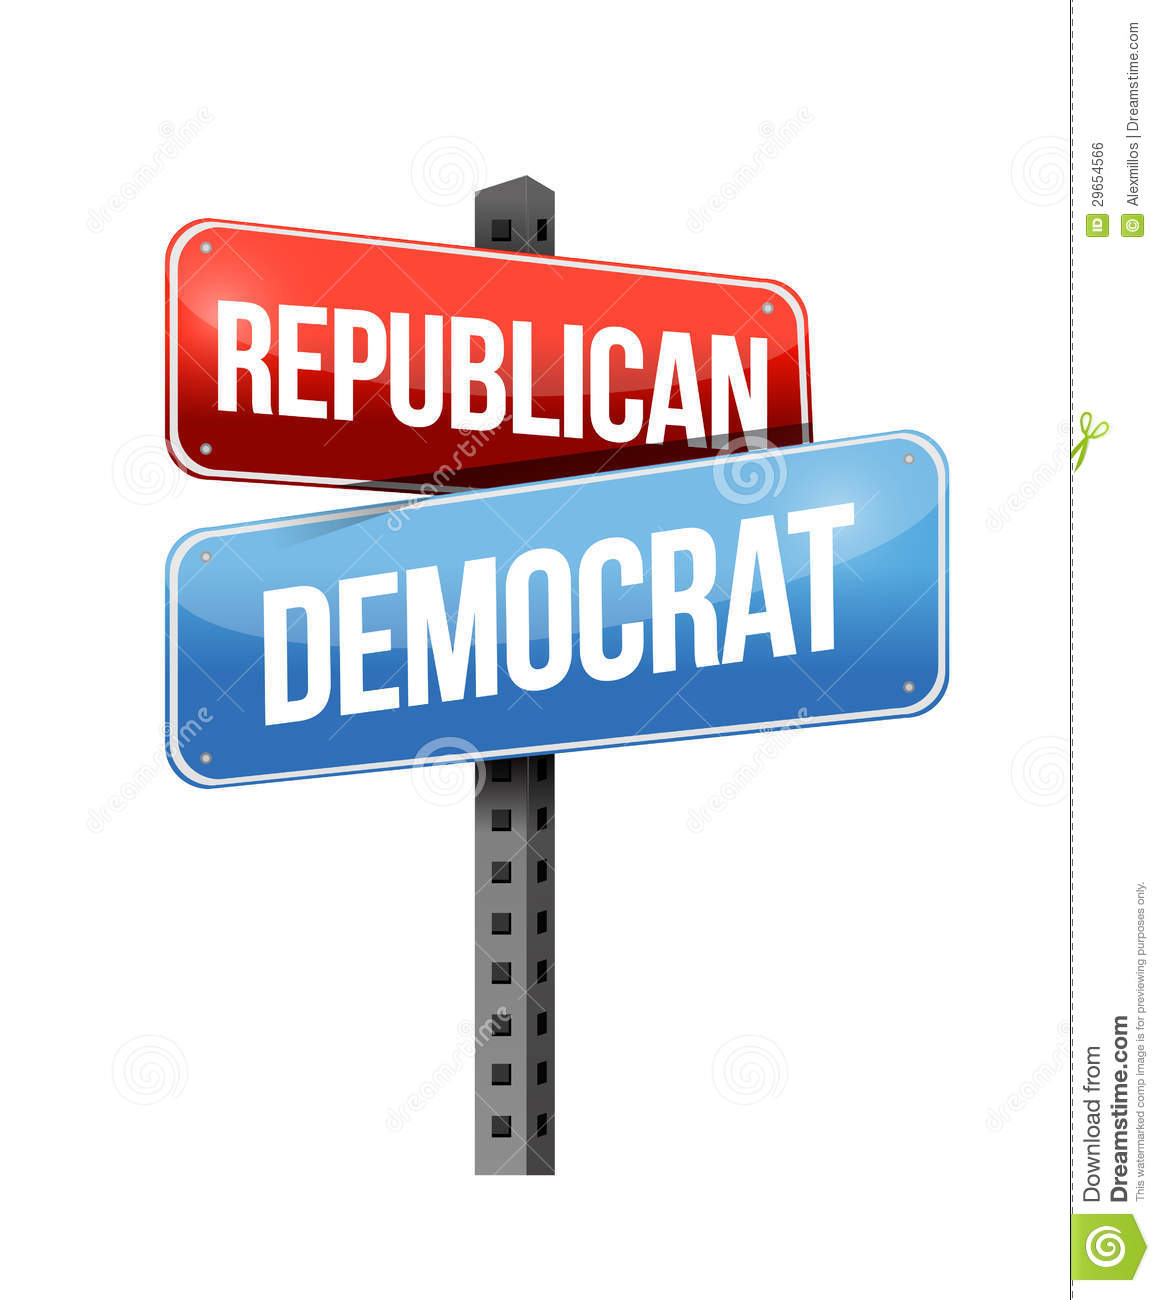 Republican Democrat Illustration Design Over A White Background